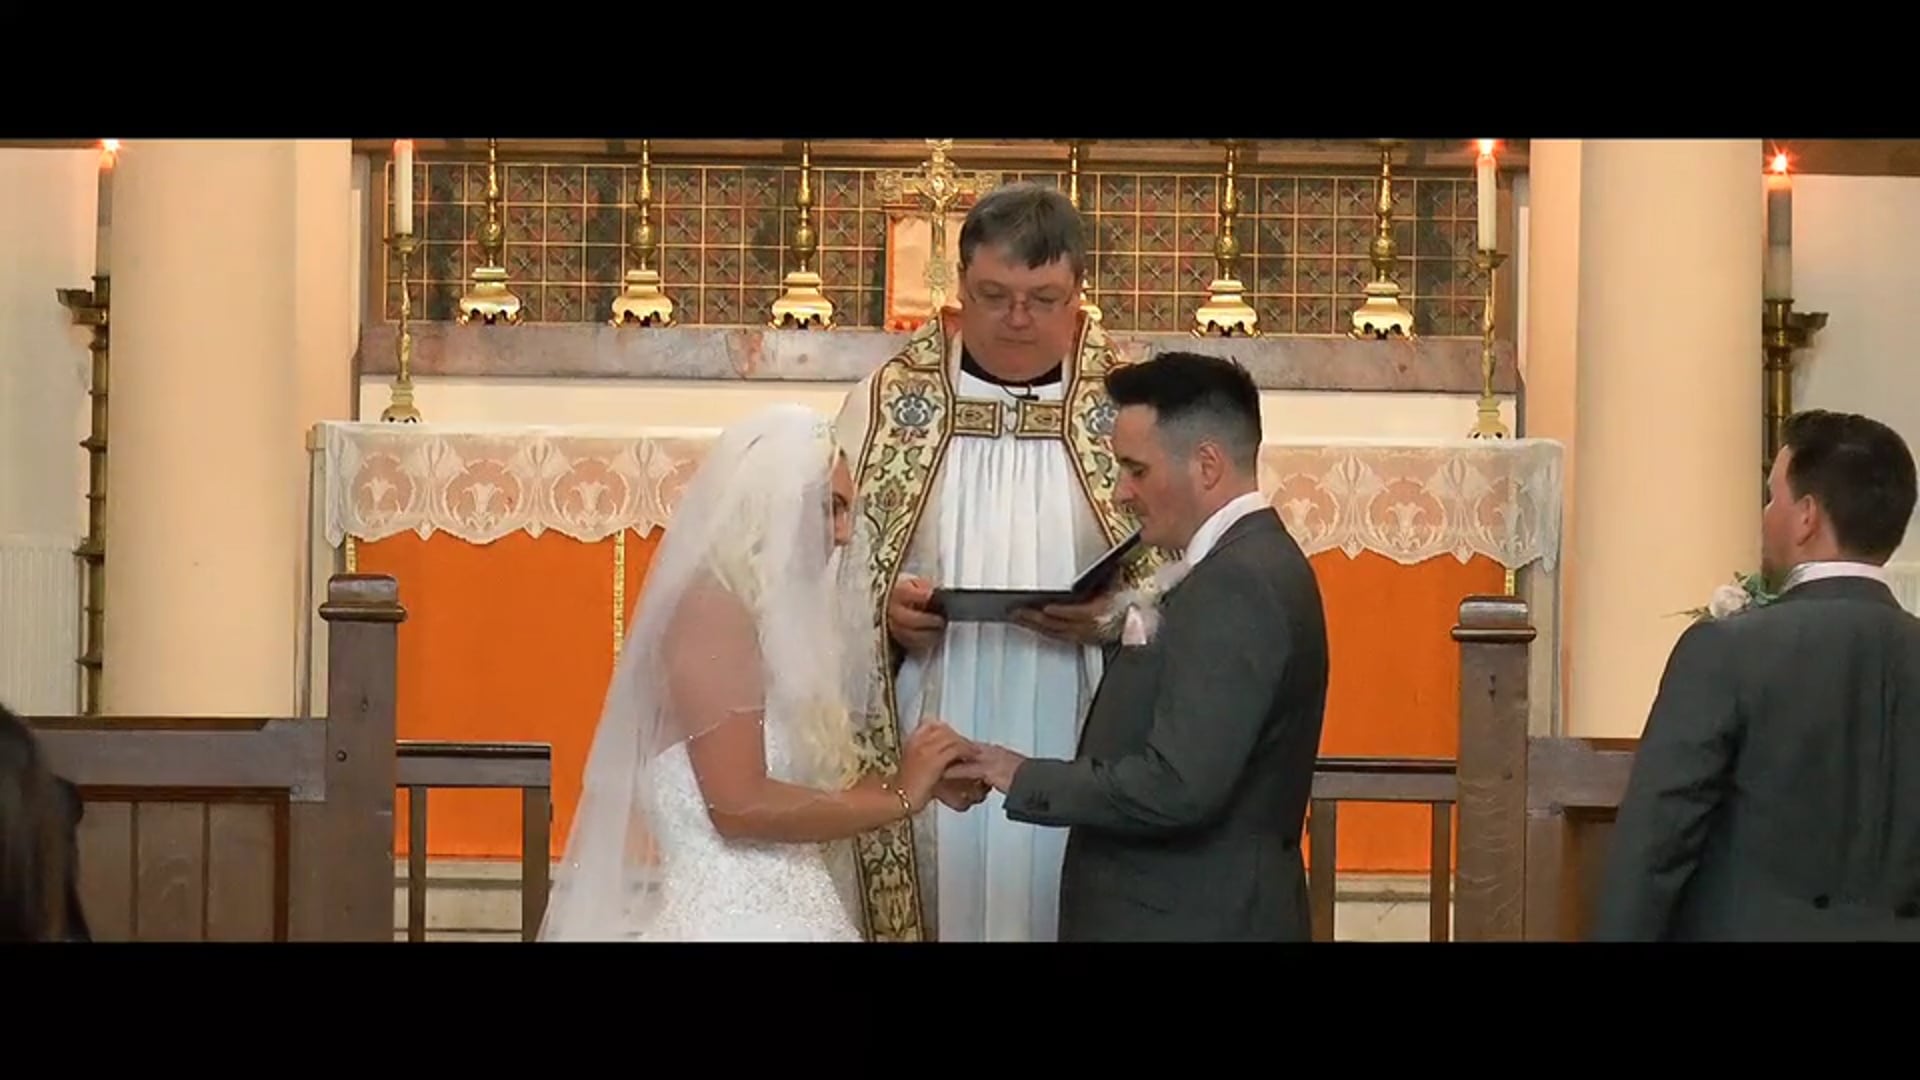 Church Wedding Ceremony - Edited Sample